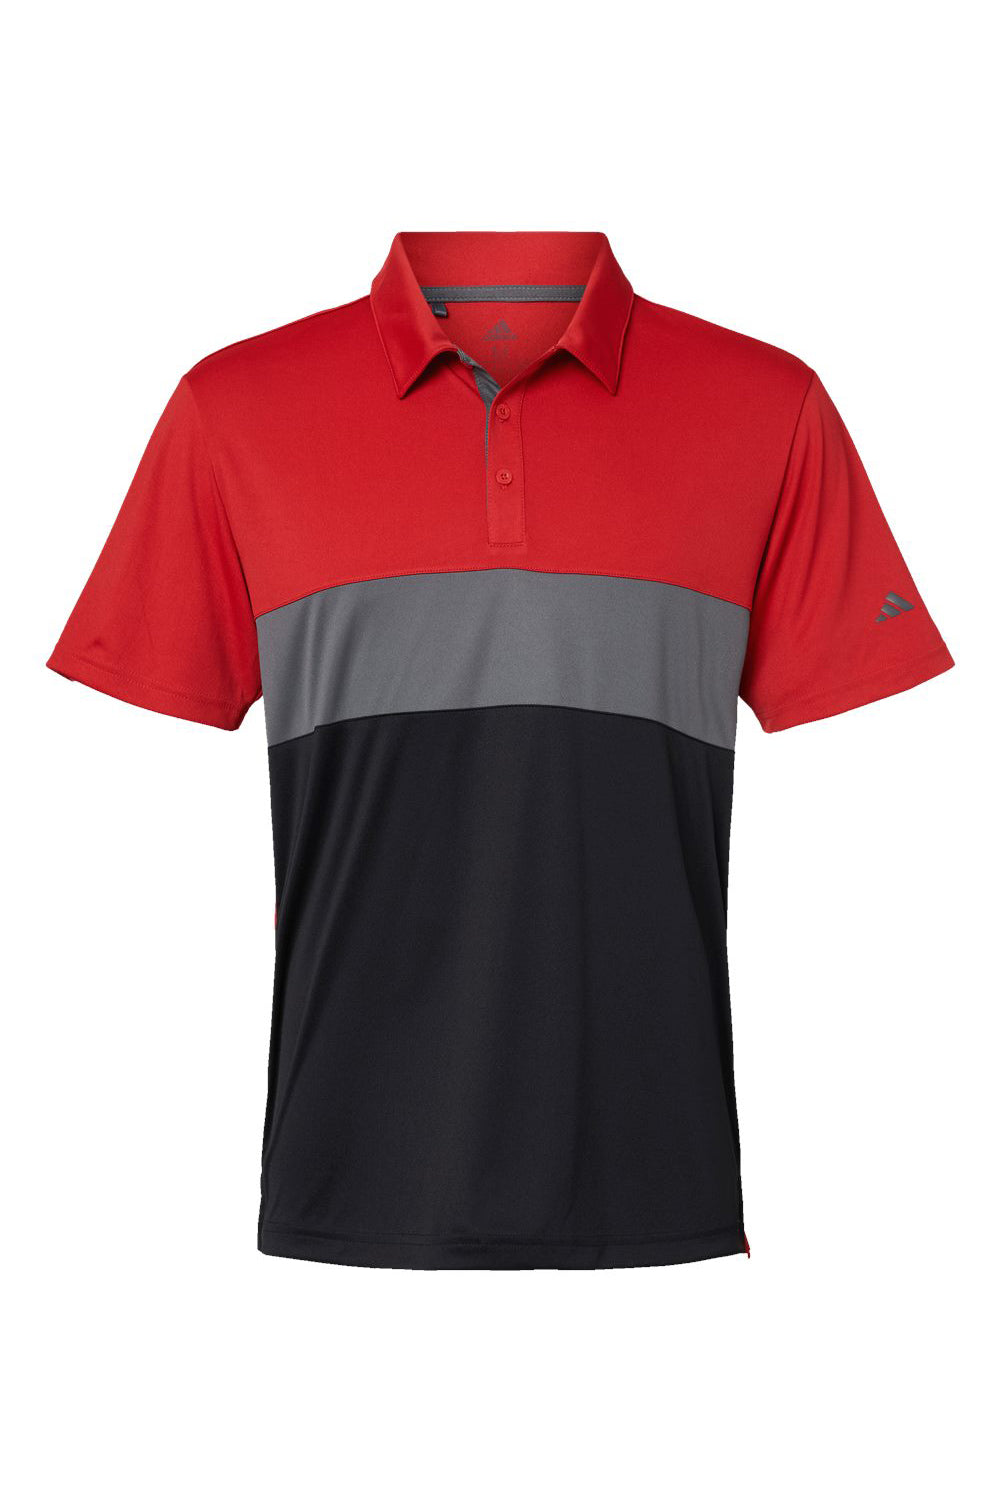 Adidas A236 Mens Merch Block UPF 50+ Short Sleeve Polo Shirt Collegiate Red/Grey/Black Flat Front